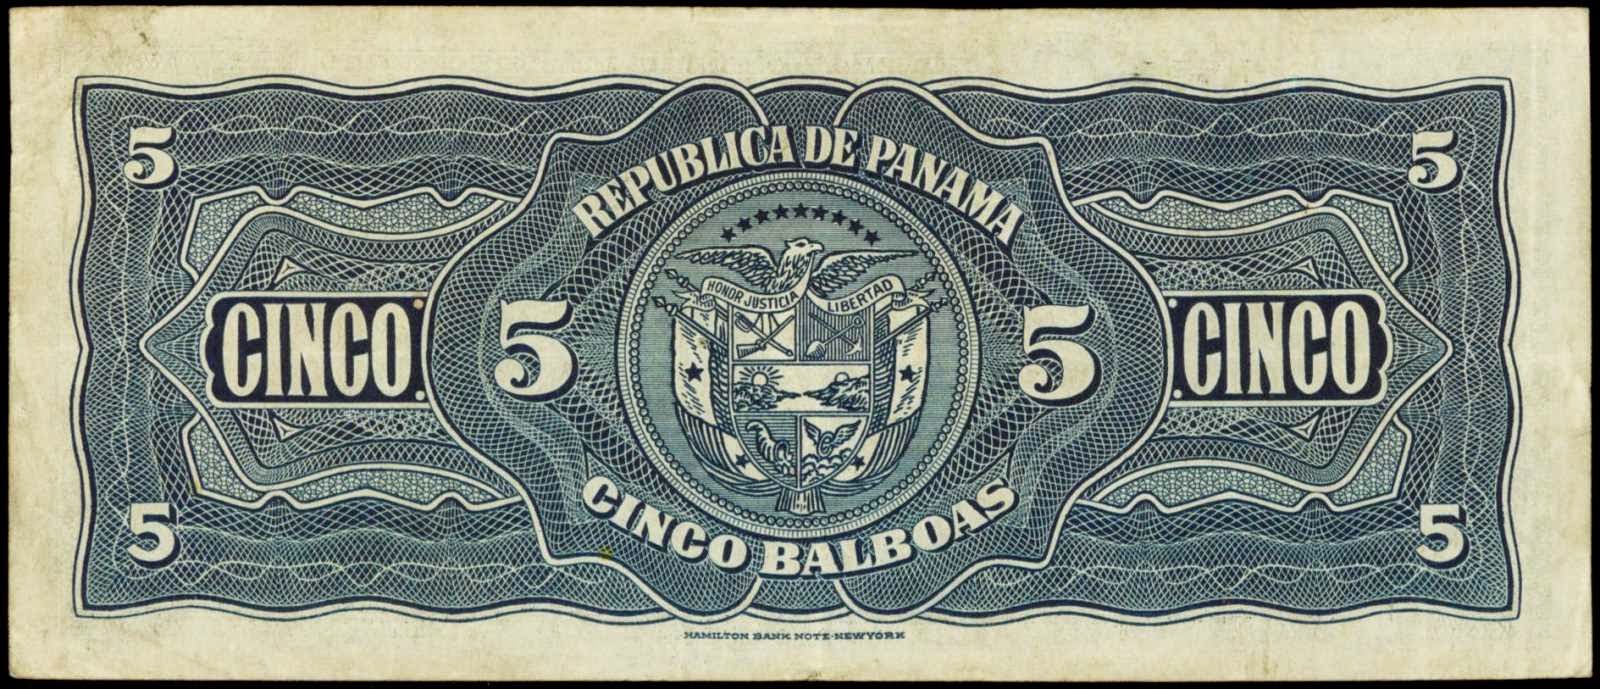 Republica de Panama